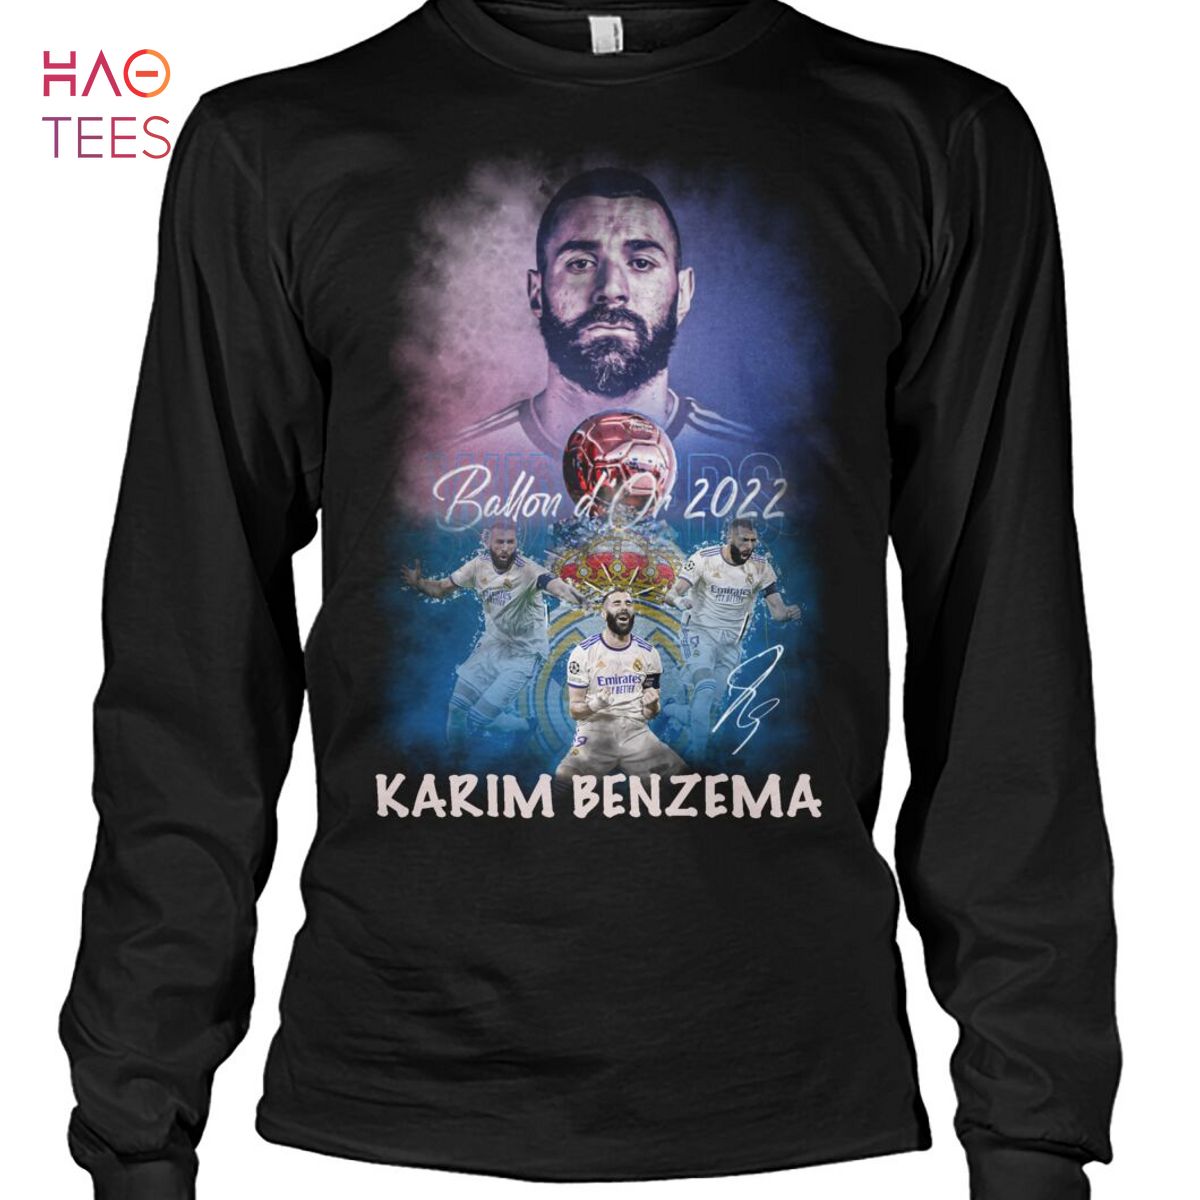 HOT Karim Benzema Shirt Limited Edition